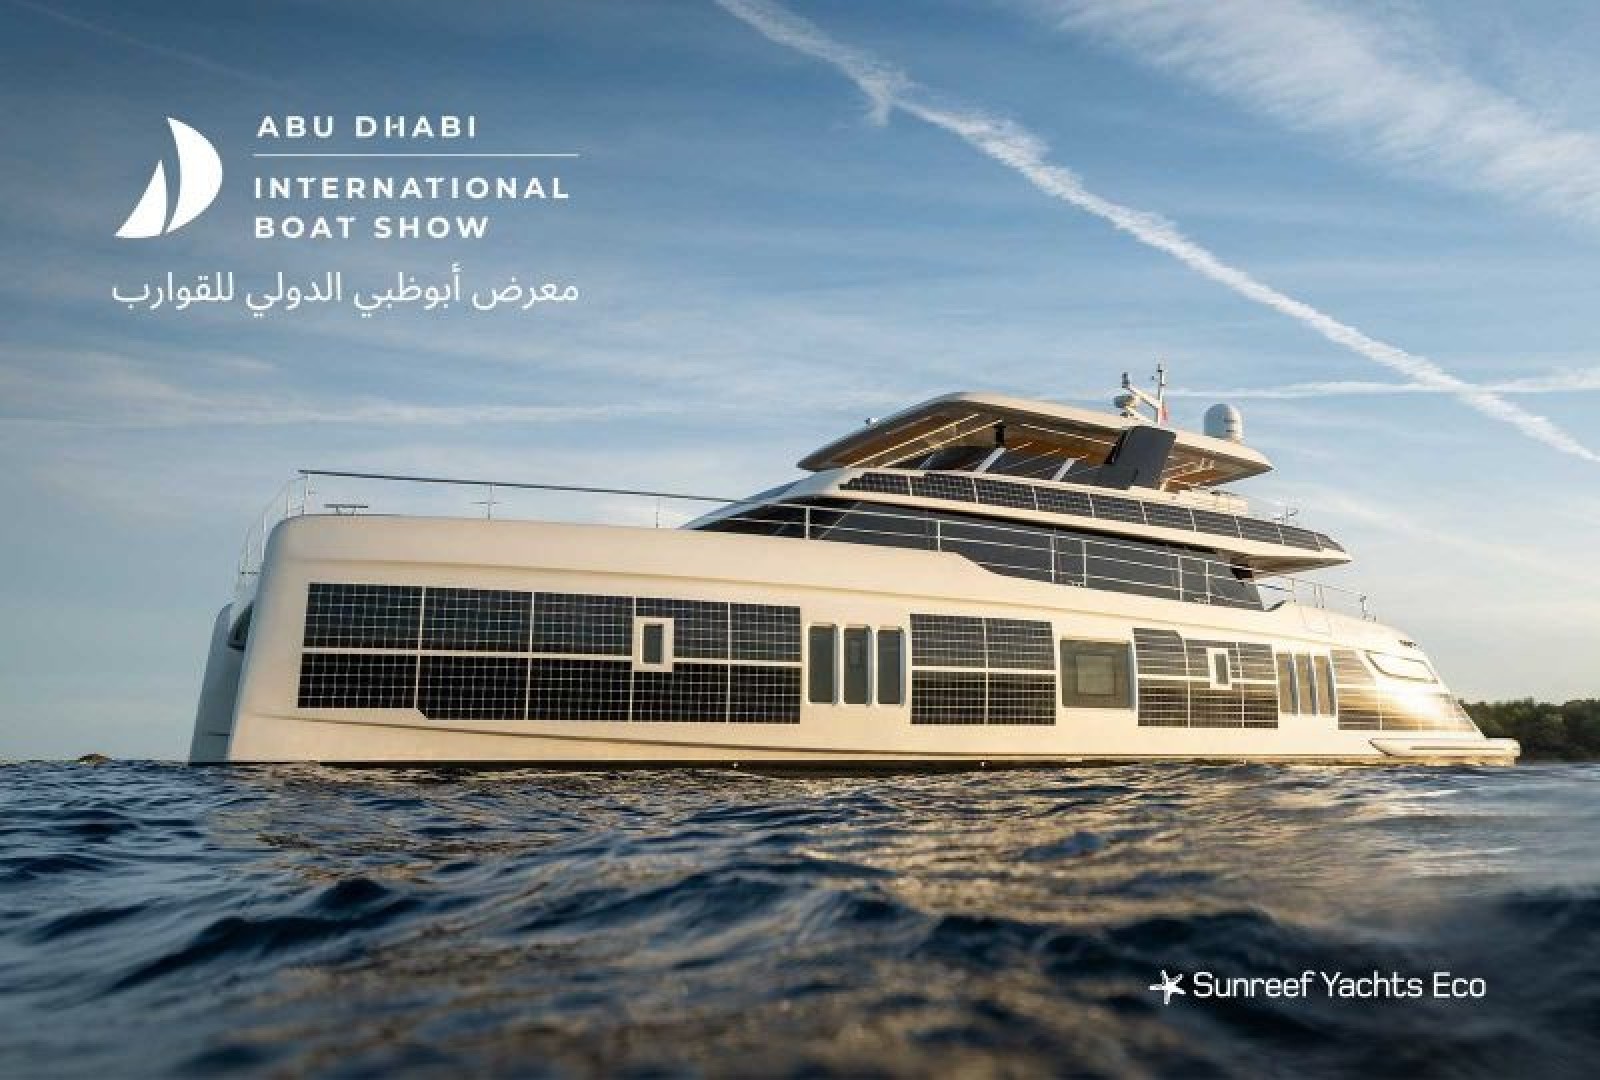 Sunreef Yachts: final countdown to Abu Dhabi International Boat Show